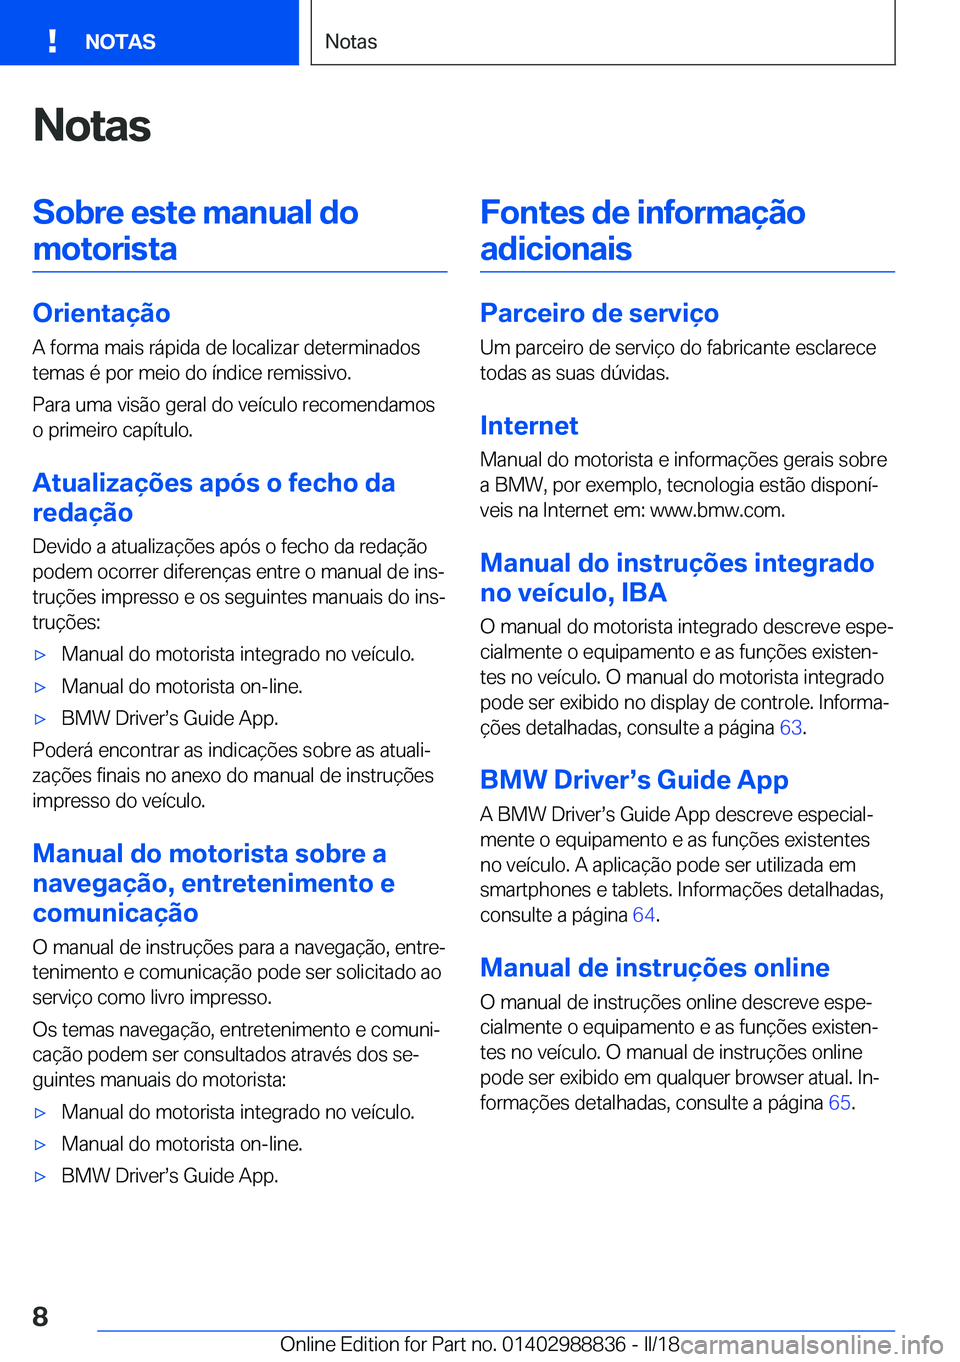 BMW X5 2018  Manual do condutor (in Portuguese) �N�o�t�a�s�S�o�b�r�e��e�s�t�e��m�a�n�u�a�l��d�o�m�o�t�o�r�i�s�t�a
�O�r�i�e�n�t�a�